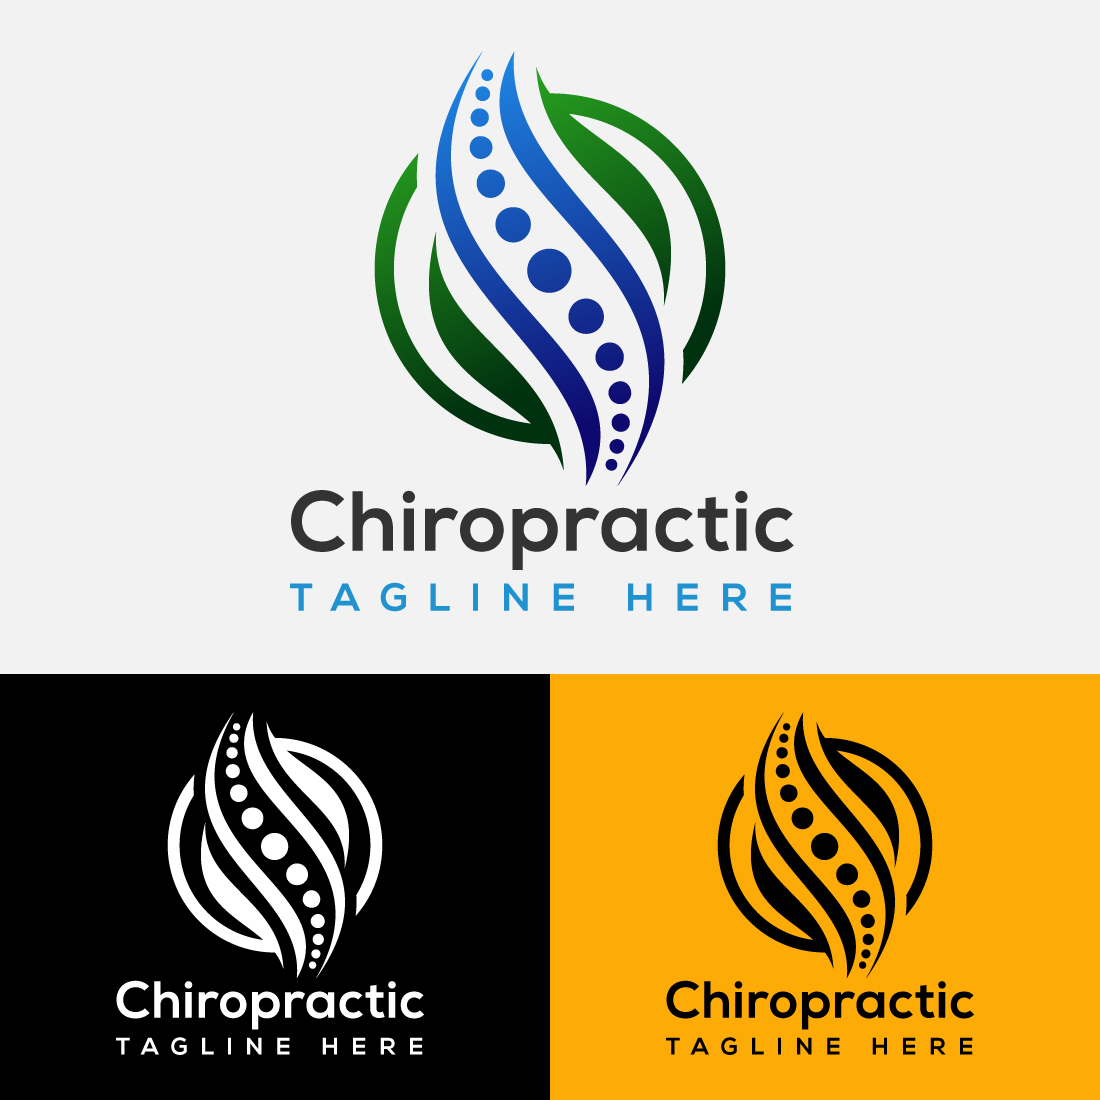 Orthopedic Medical Logo Vector Design cover image.